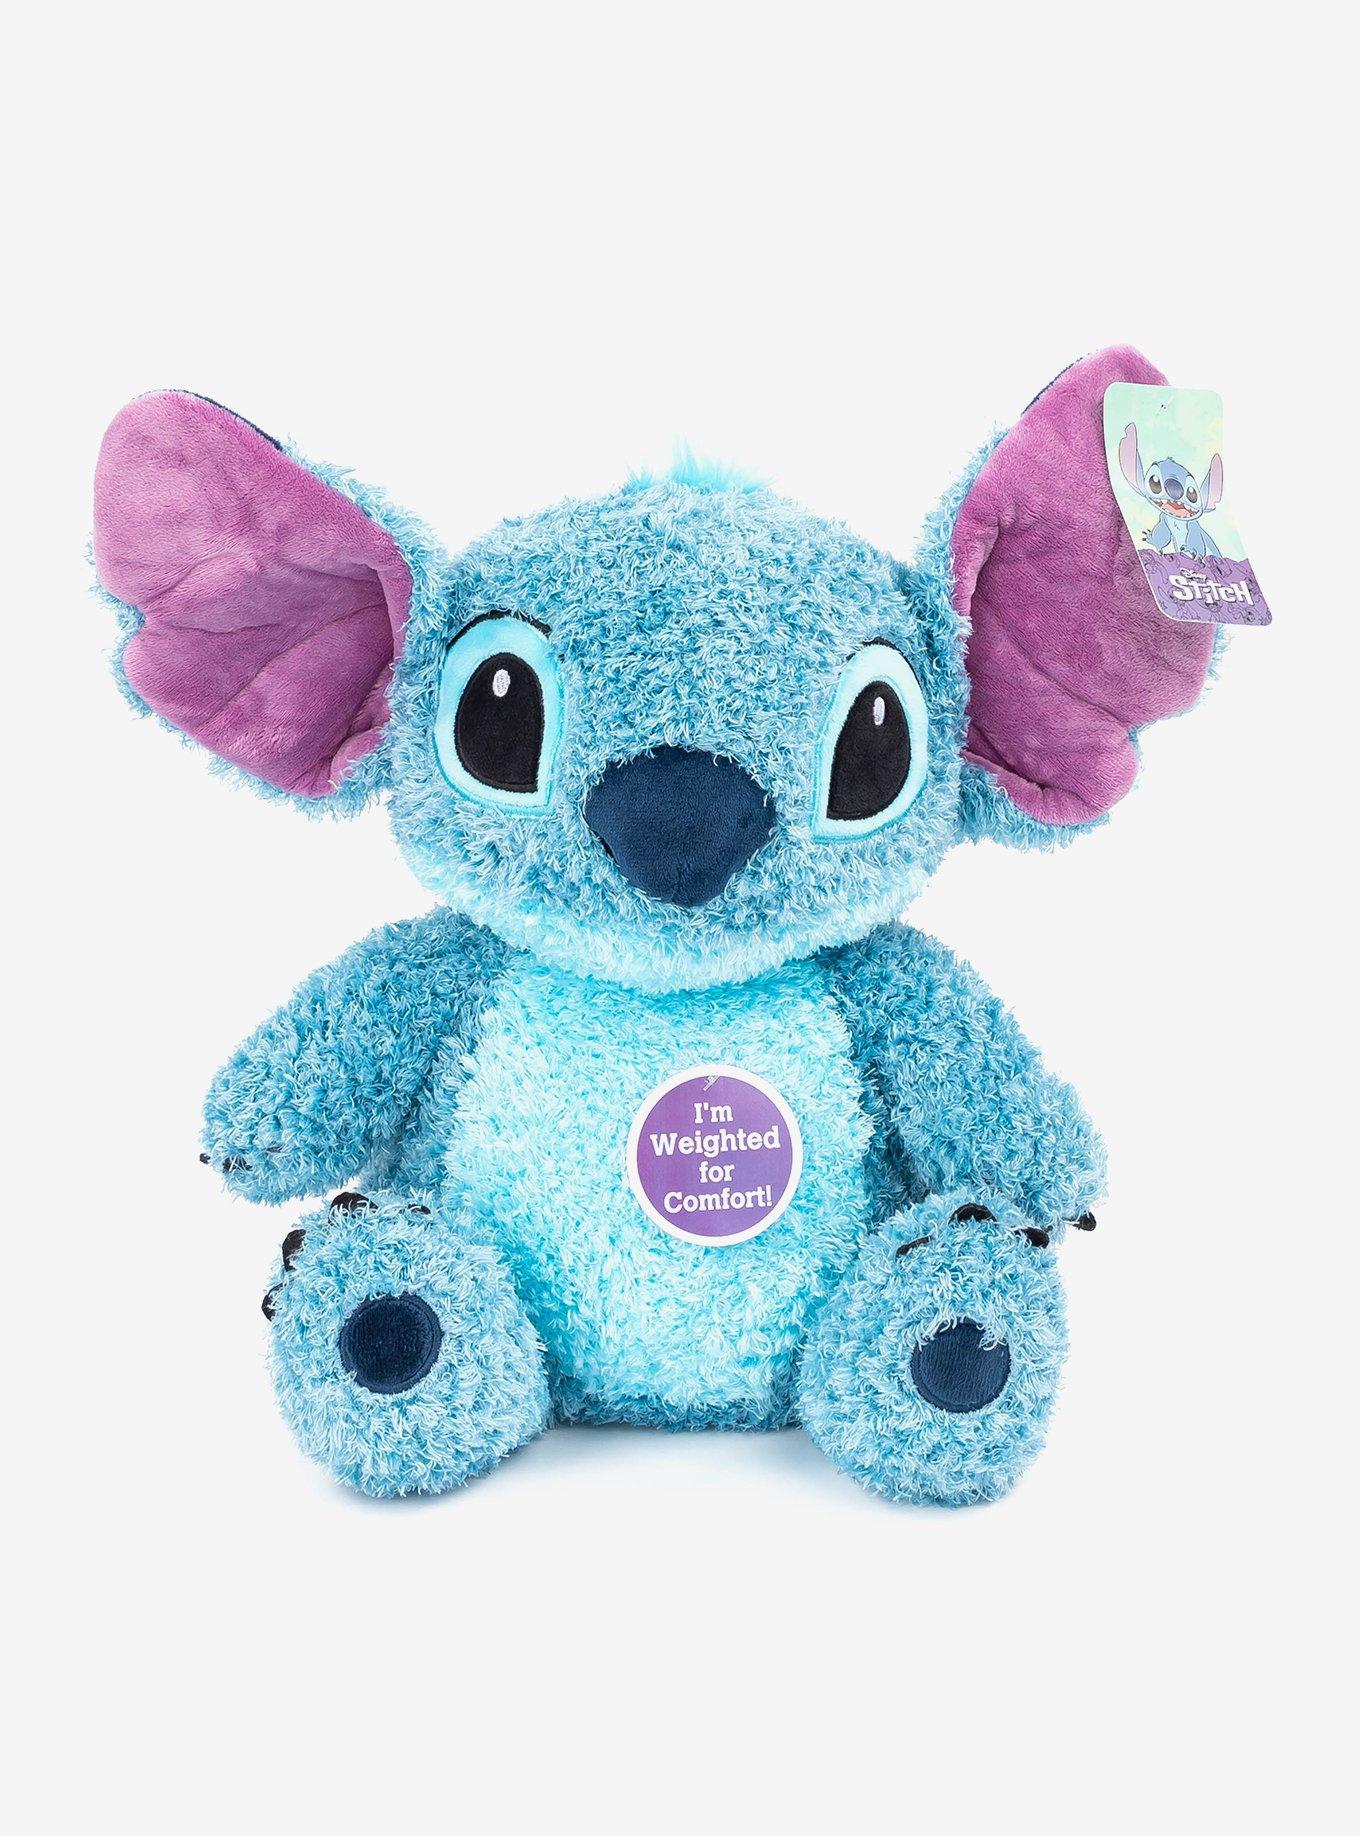 Plush Stitch Disney, Plush Sleeping Toys